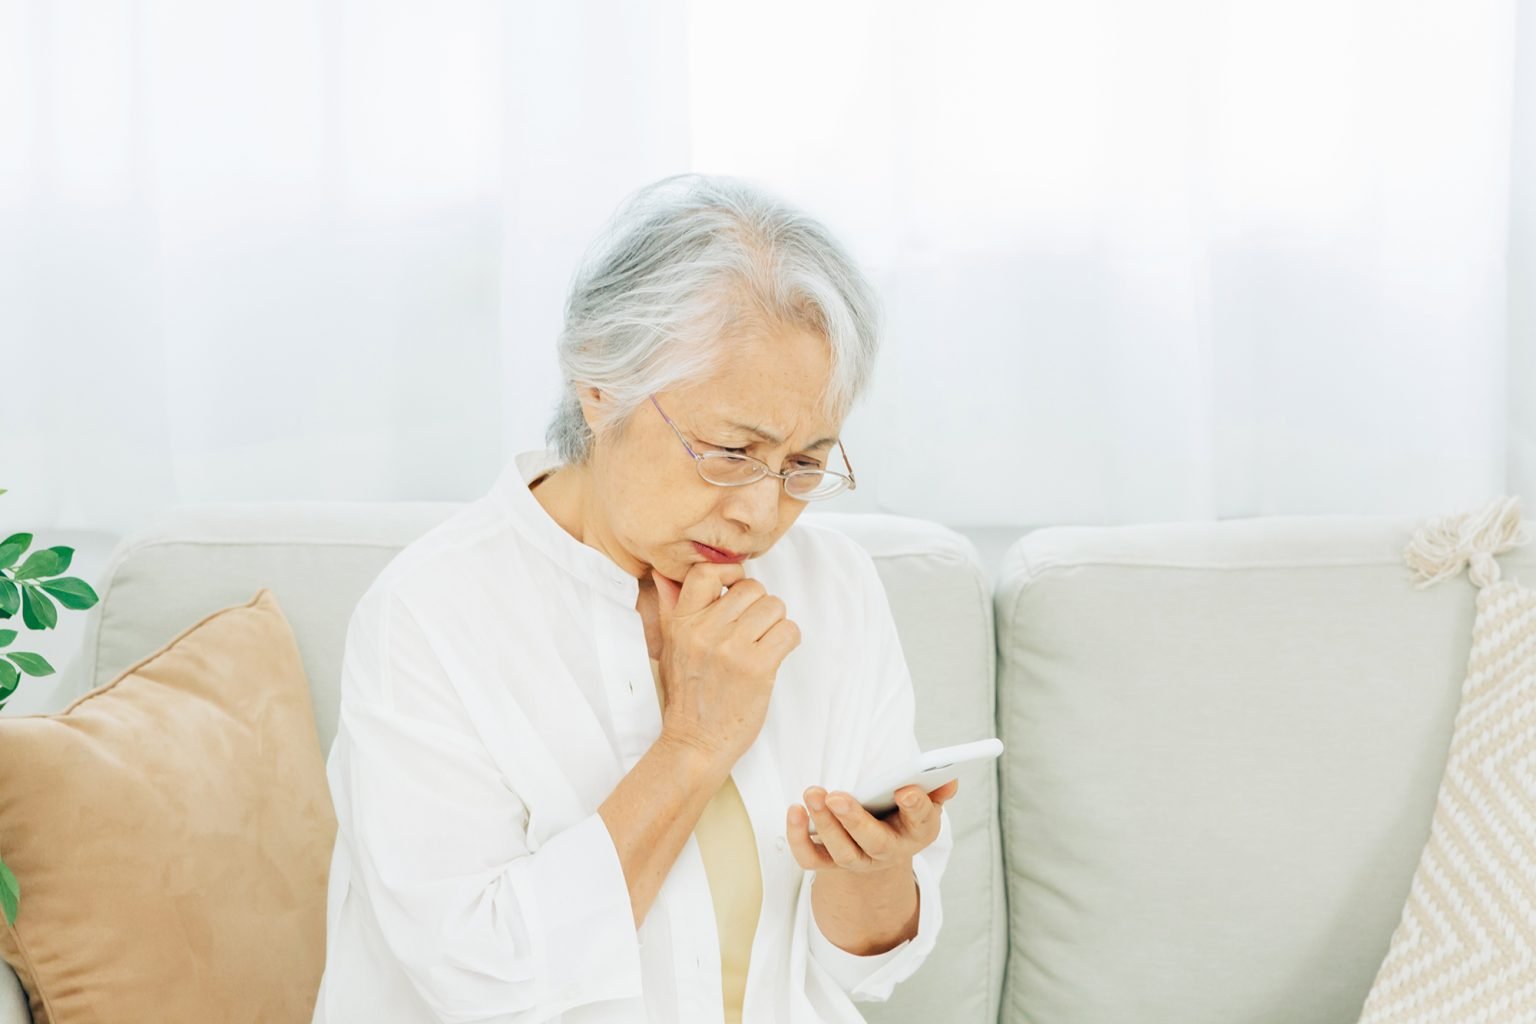 Elderly woman looking worried and looking at her phone